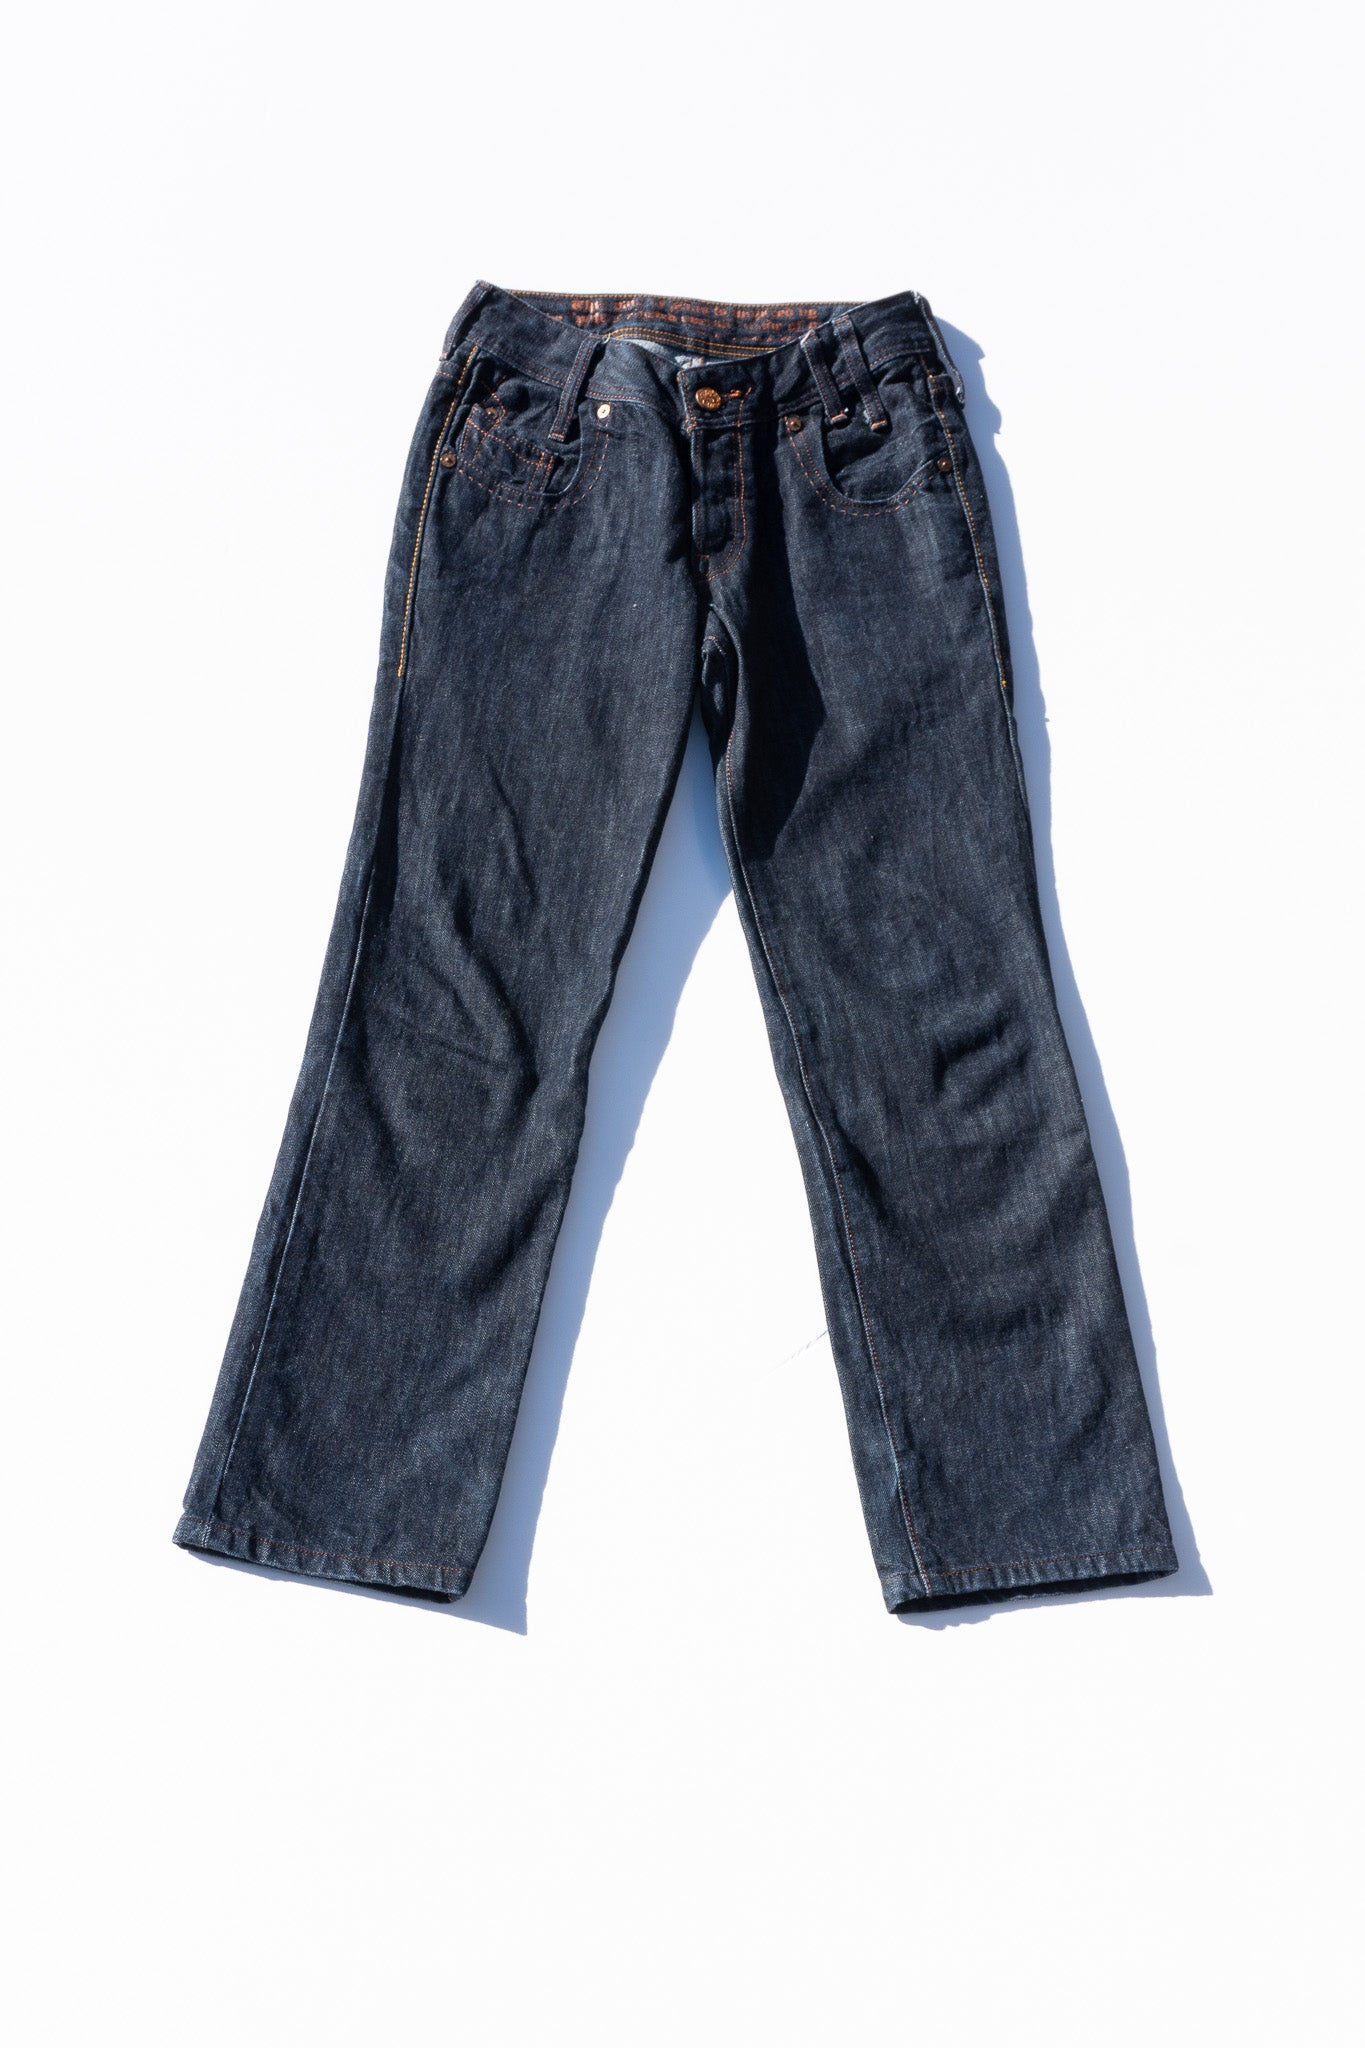 "Levi's" Copper Edition Jeans